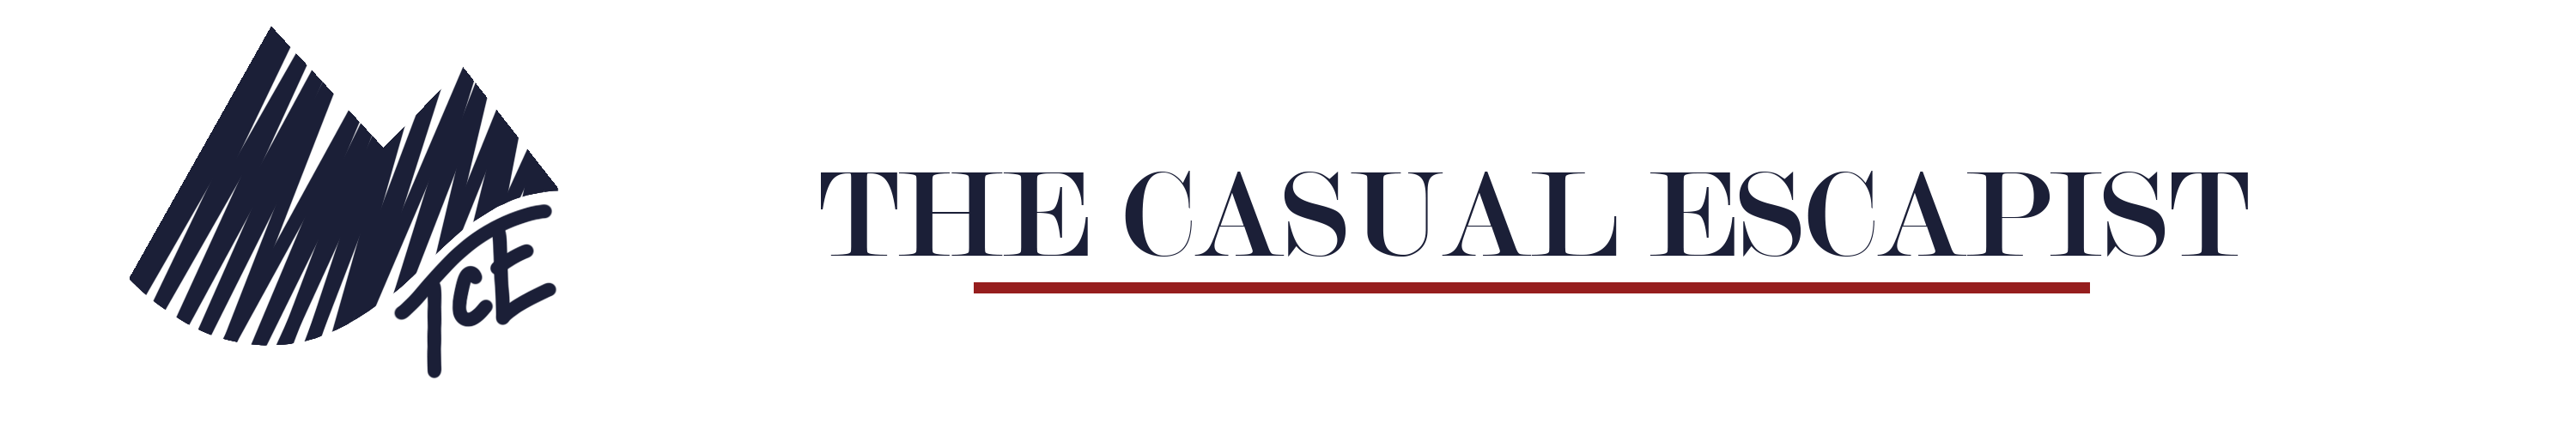 Escaptist Logo - The Casual Escapist's Artist Shop | Featuring custom t-shirts ...